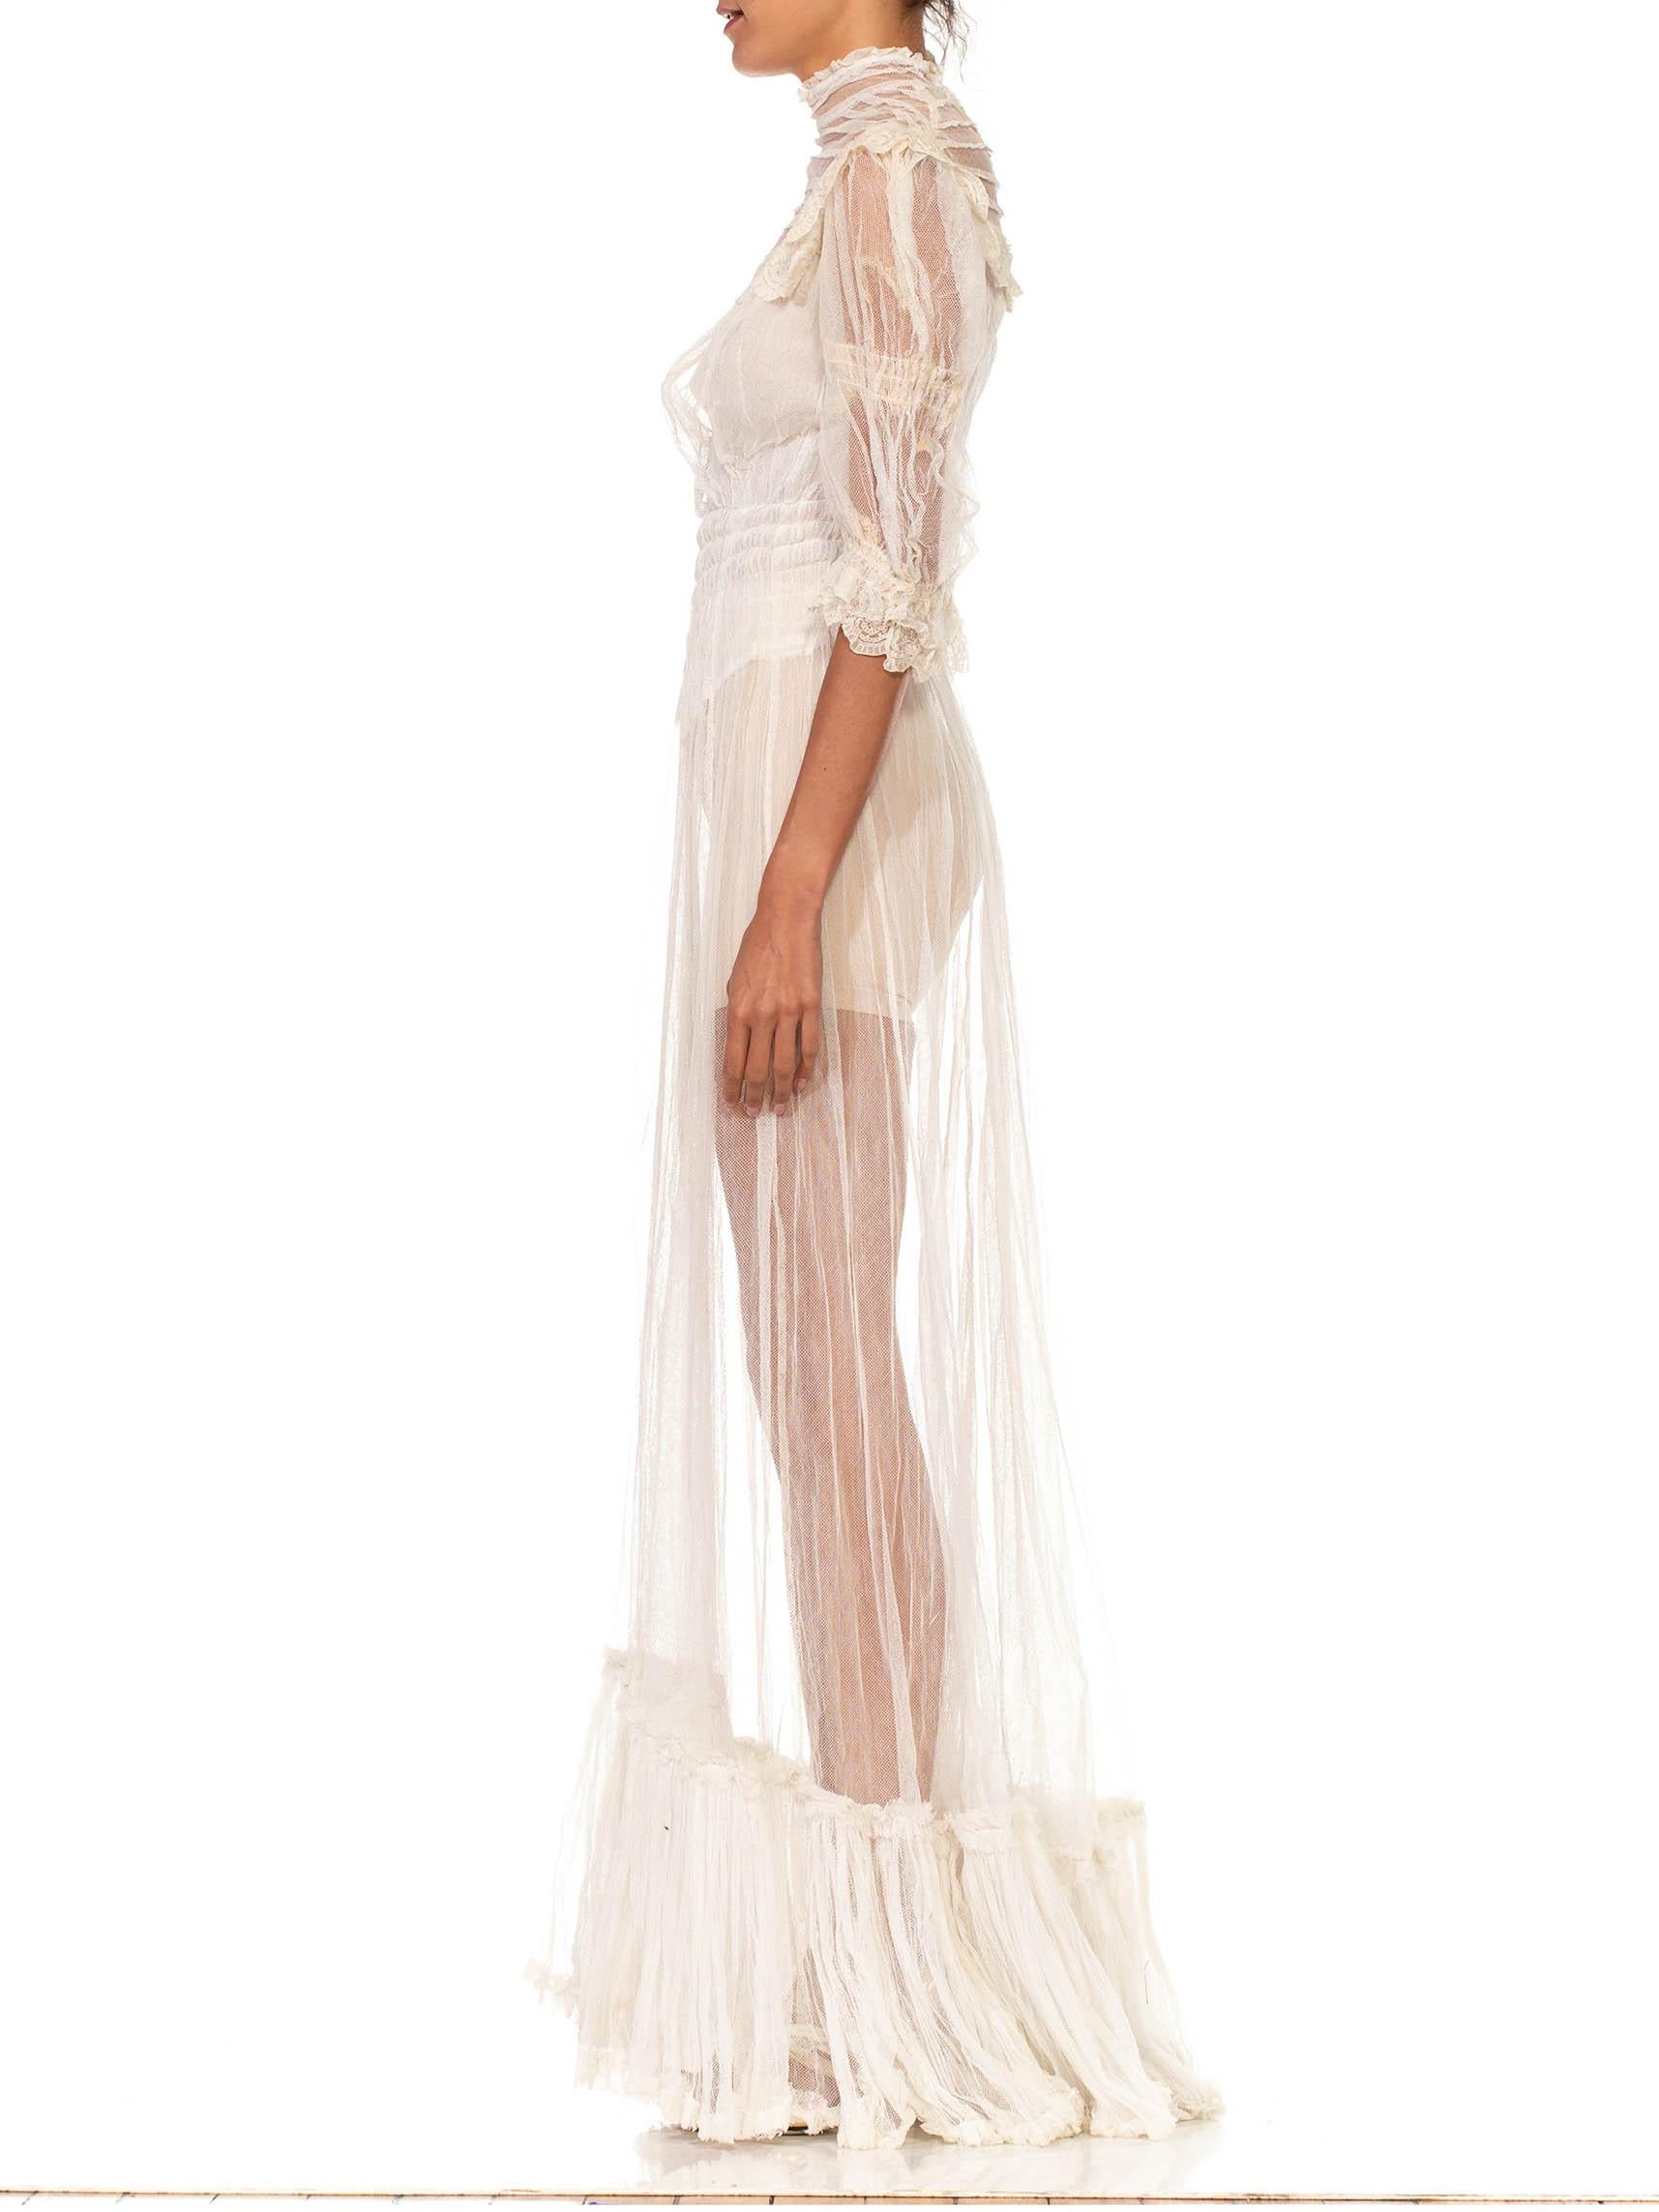 Women's Edwardian White Organic Cotton Net Short Sleeved Tea Dress With Slight Train